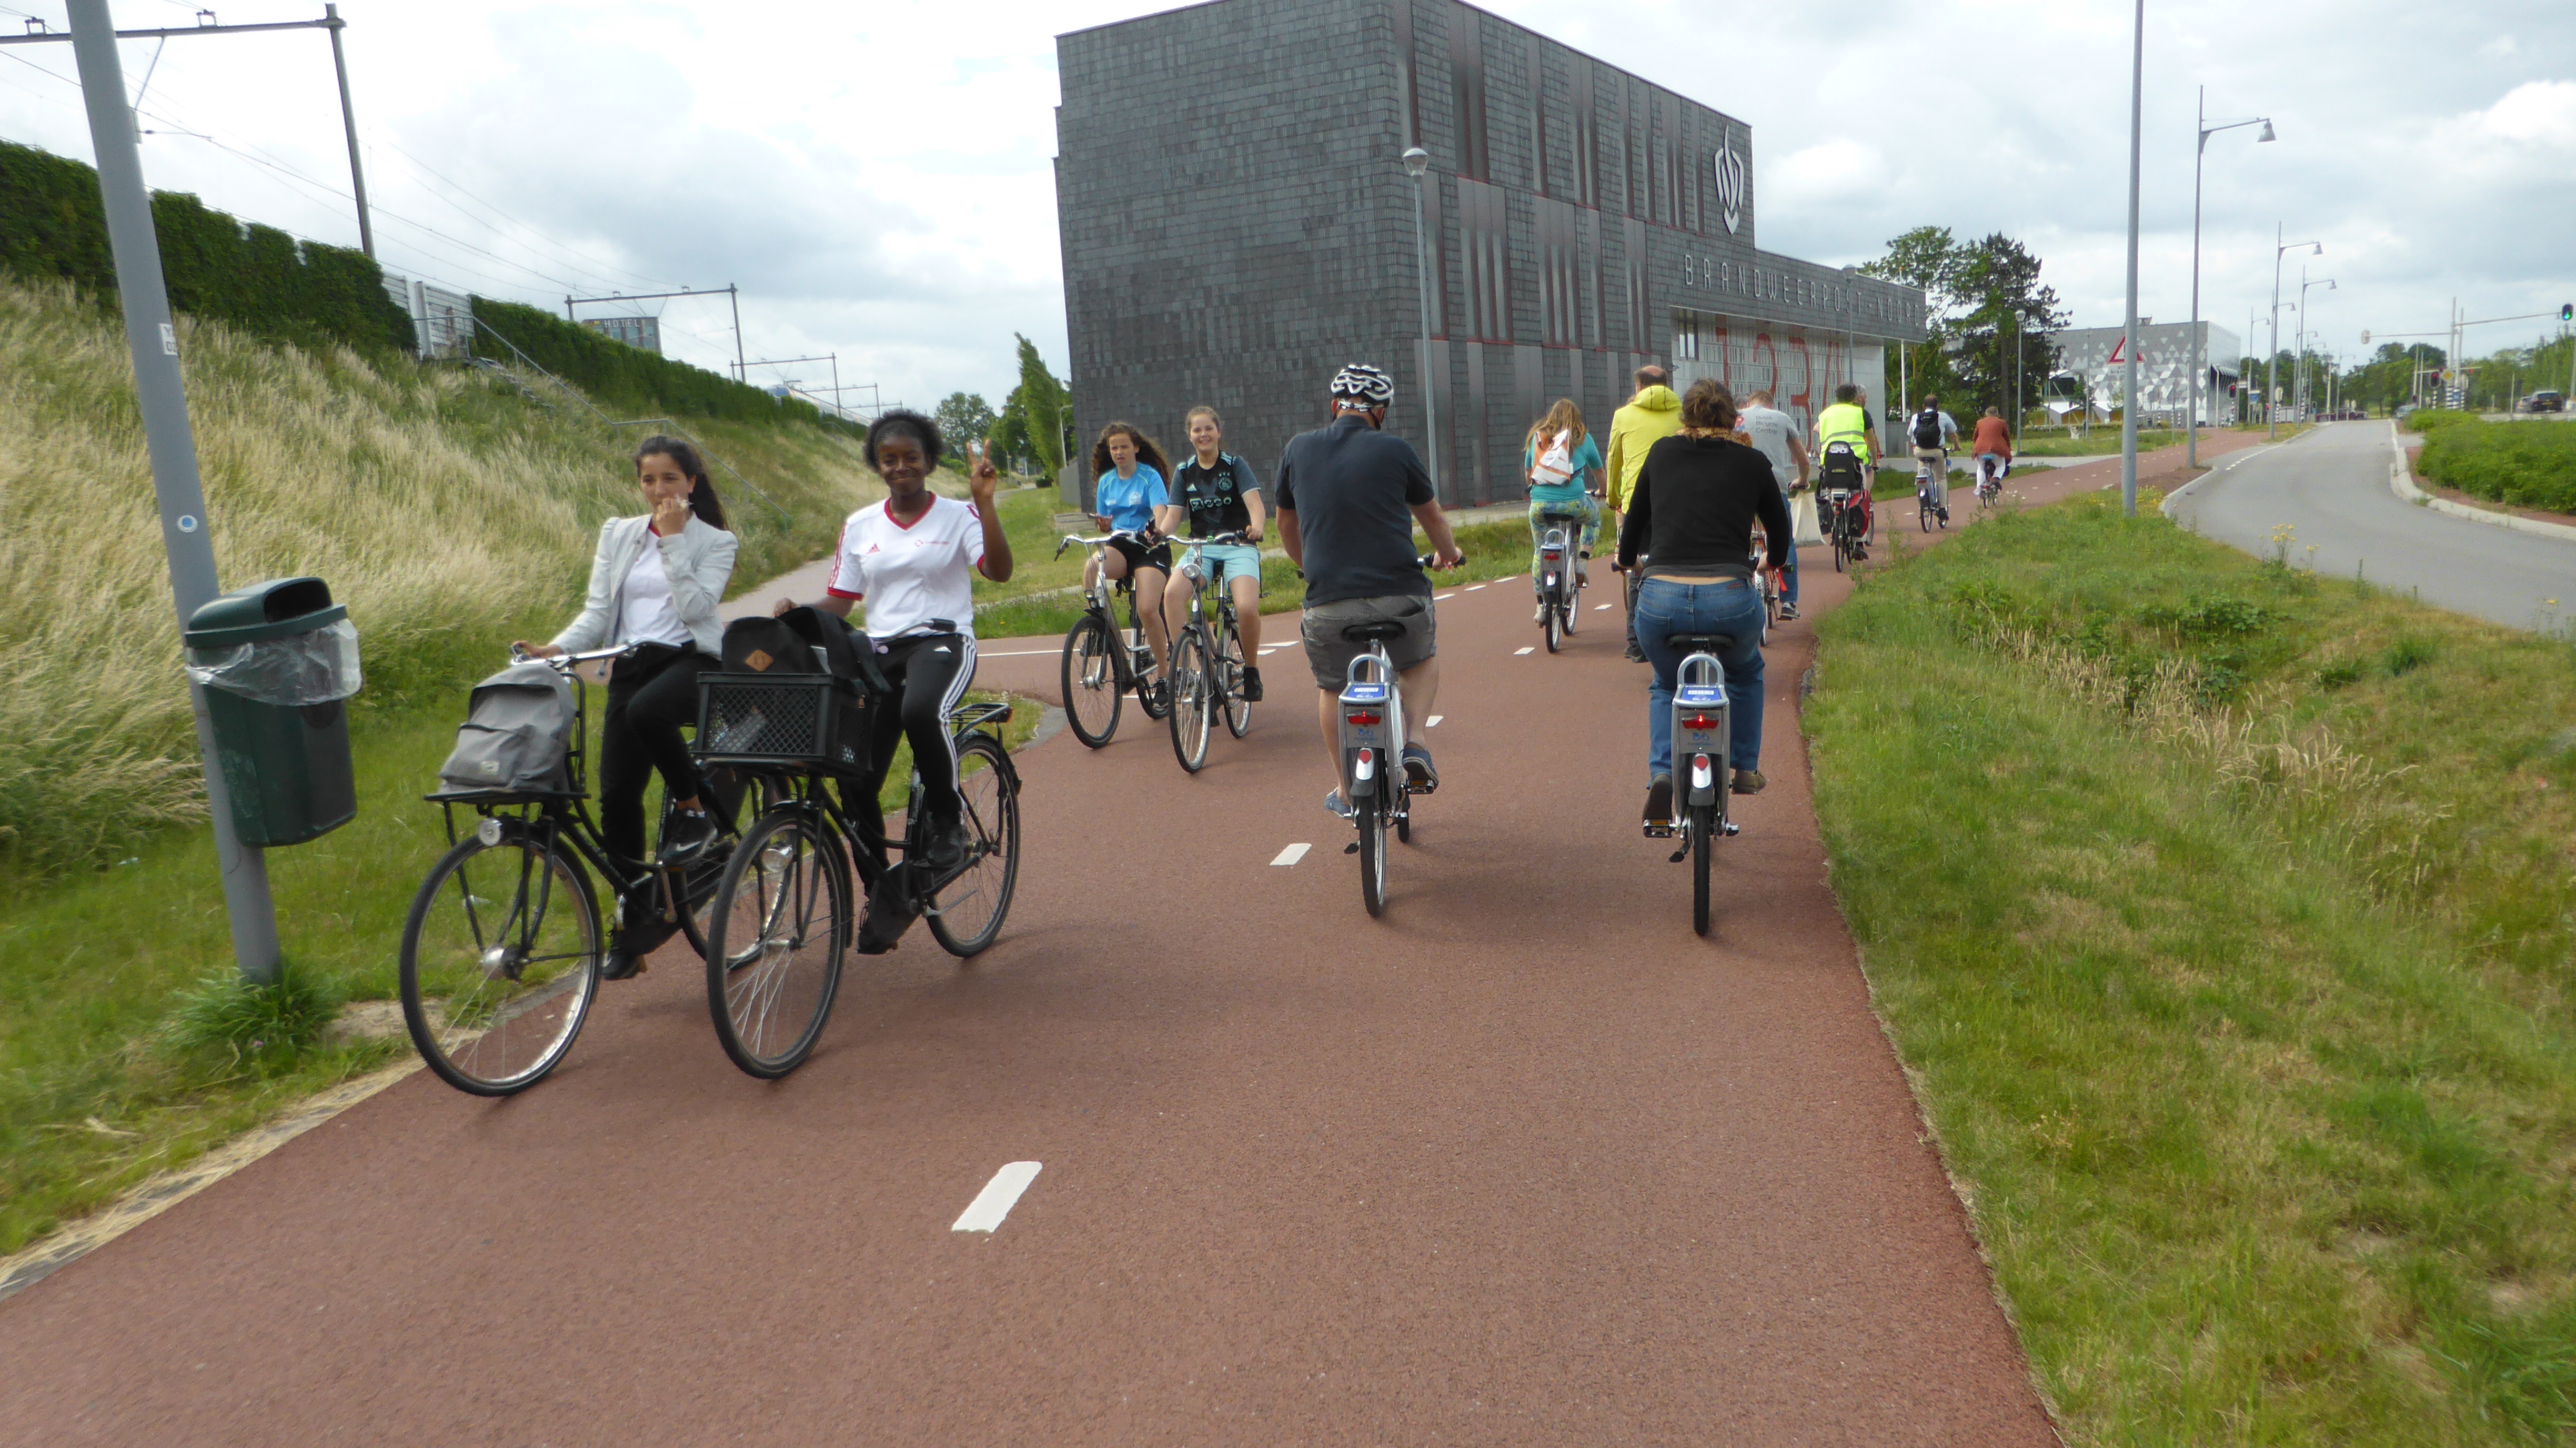 Segregated cycling lane in Njimegen, Netherlands